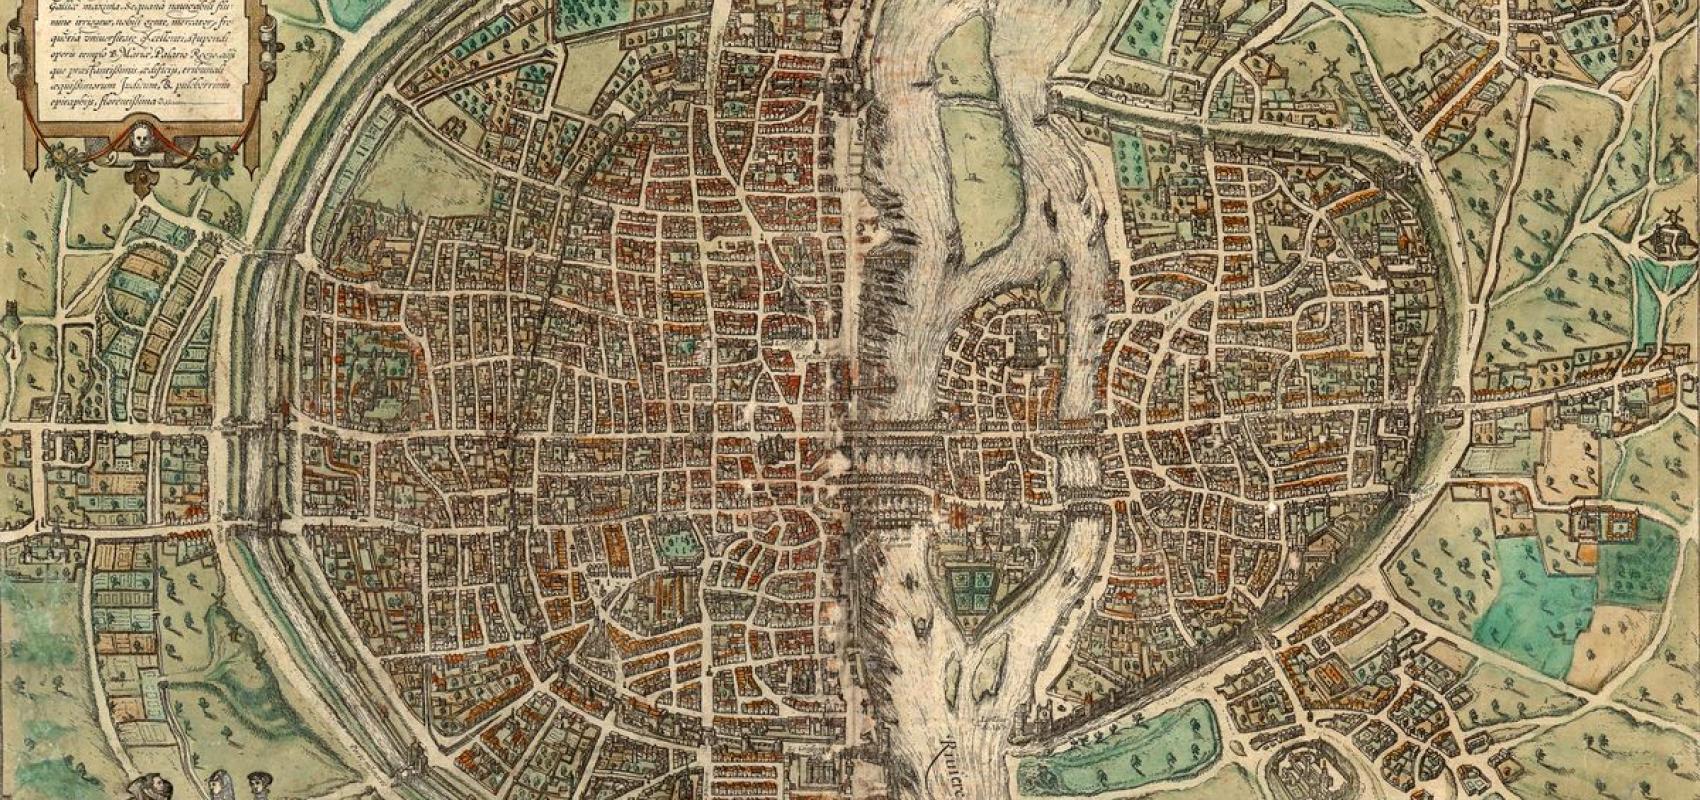 Lutetia vulgari nomine Paris, urbs Galliae maxima, plan de Georg Braun - 1599 - BnF, département des Cartes et plans